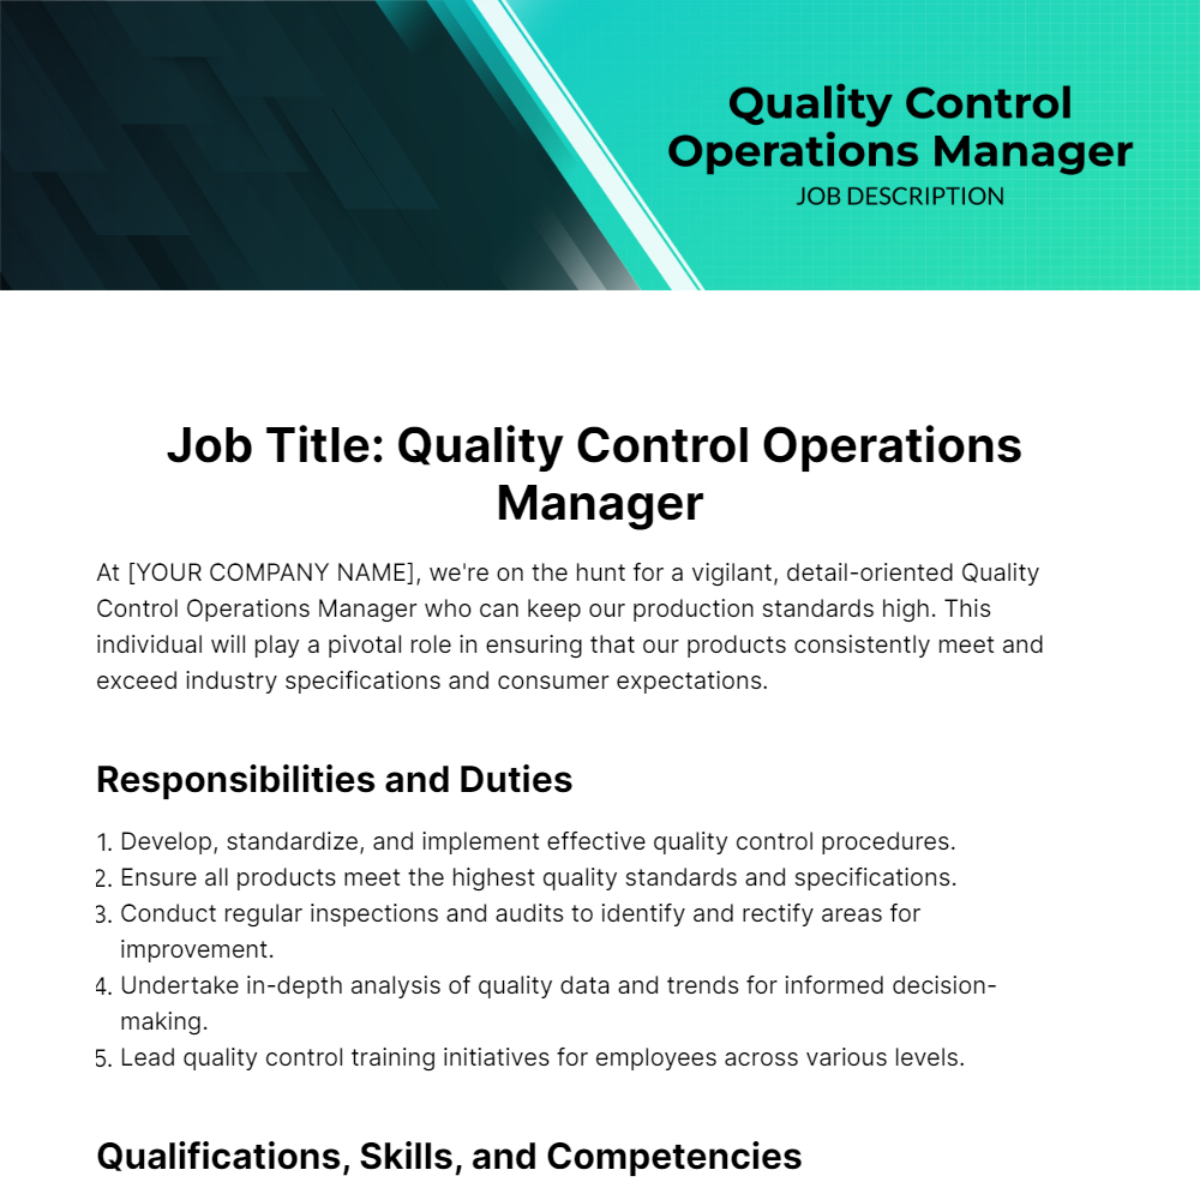 Quality Control Operations Manager Job Description Template